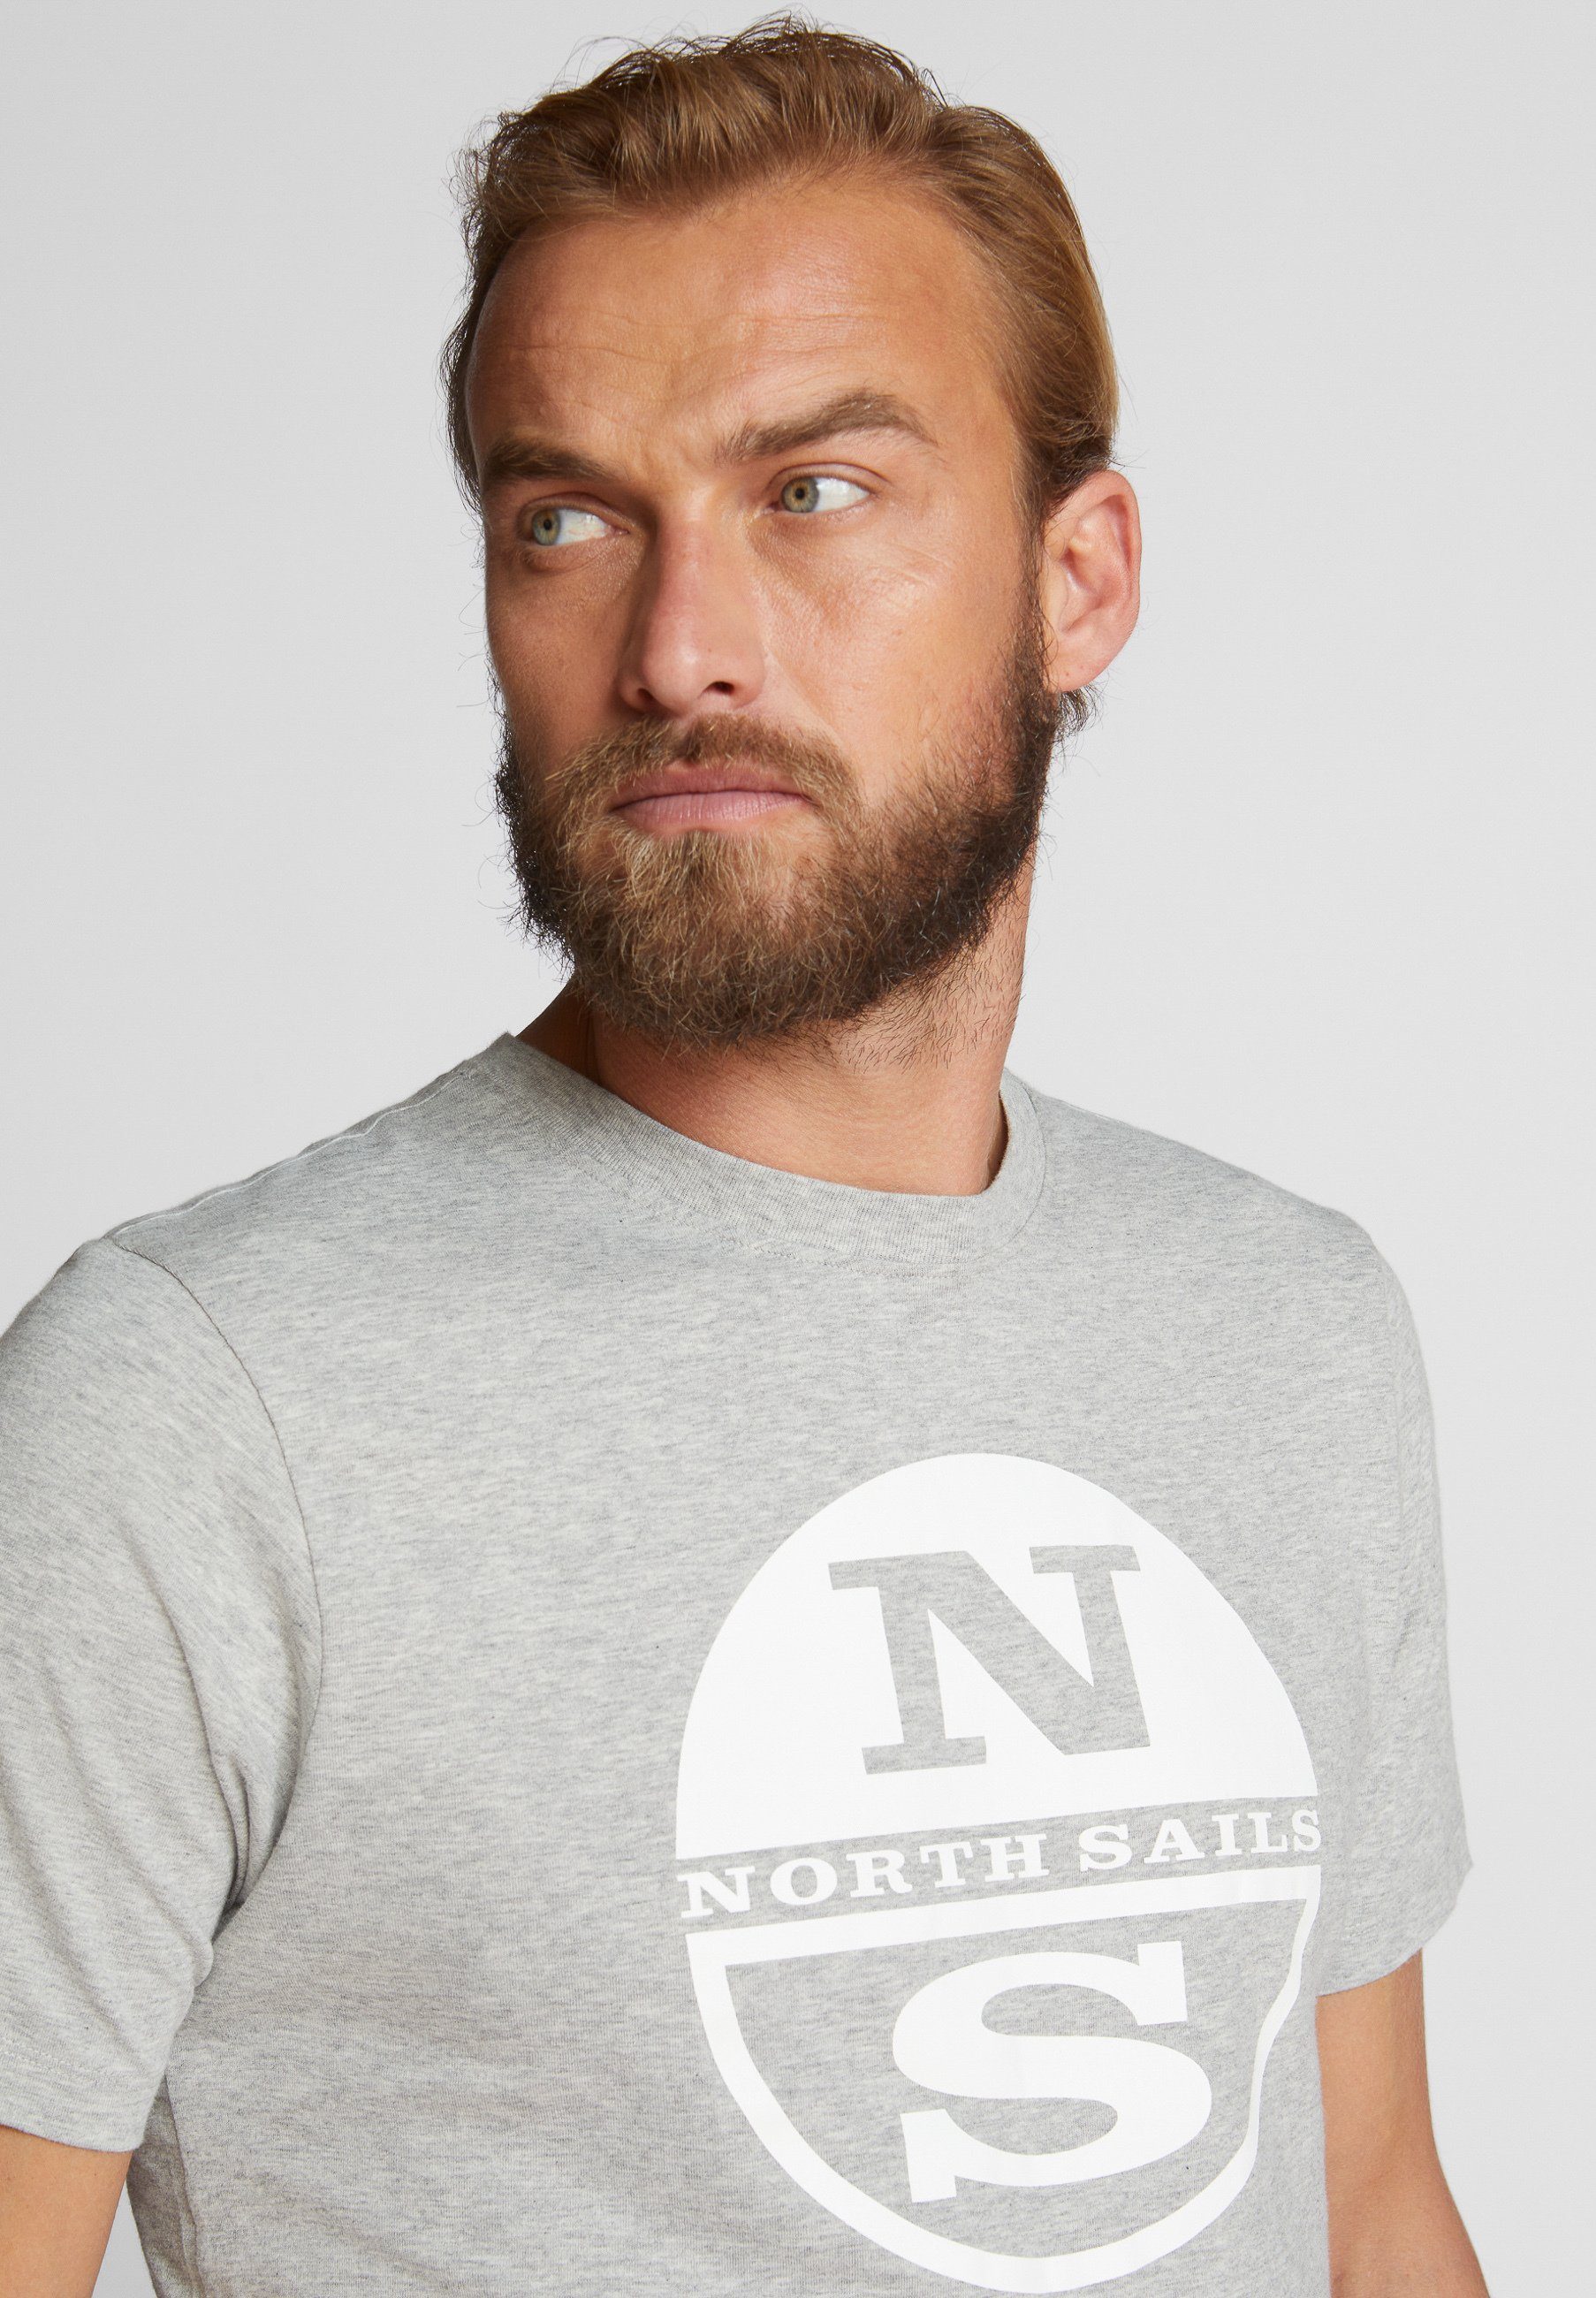 Sails Maxi-Logo North MOLORED mit T-Shirt GRAY T-shirt